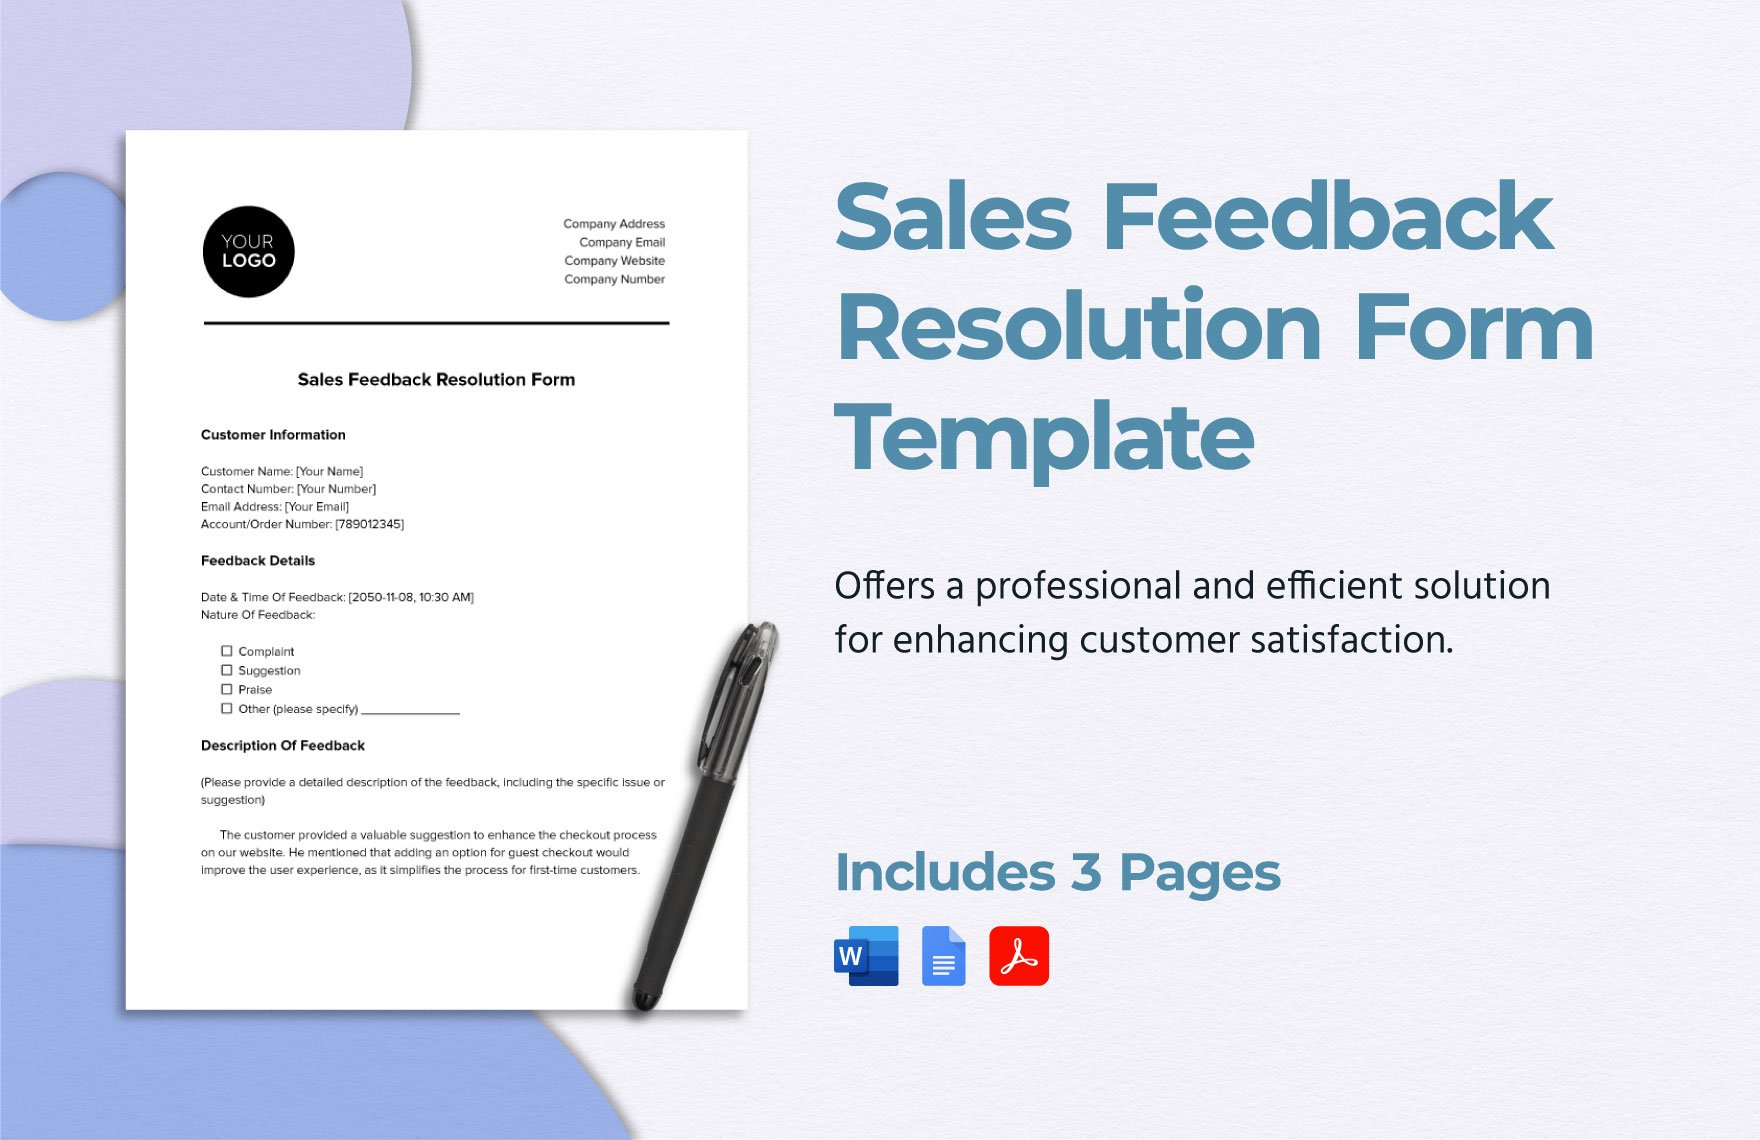 Sales Feedback Resolution Form Template in Word, Google Docs, PDF